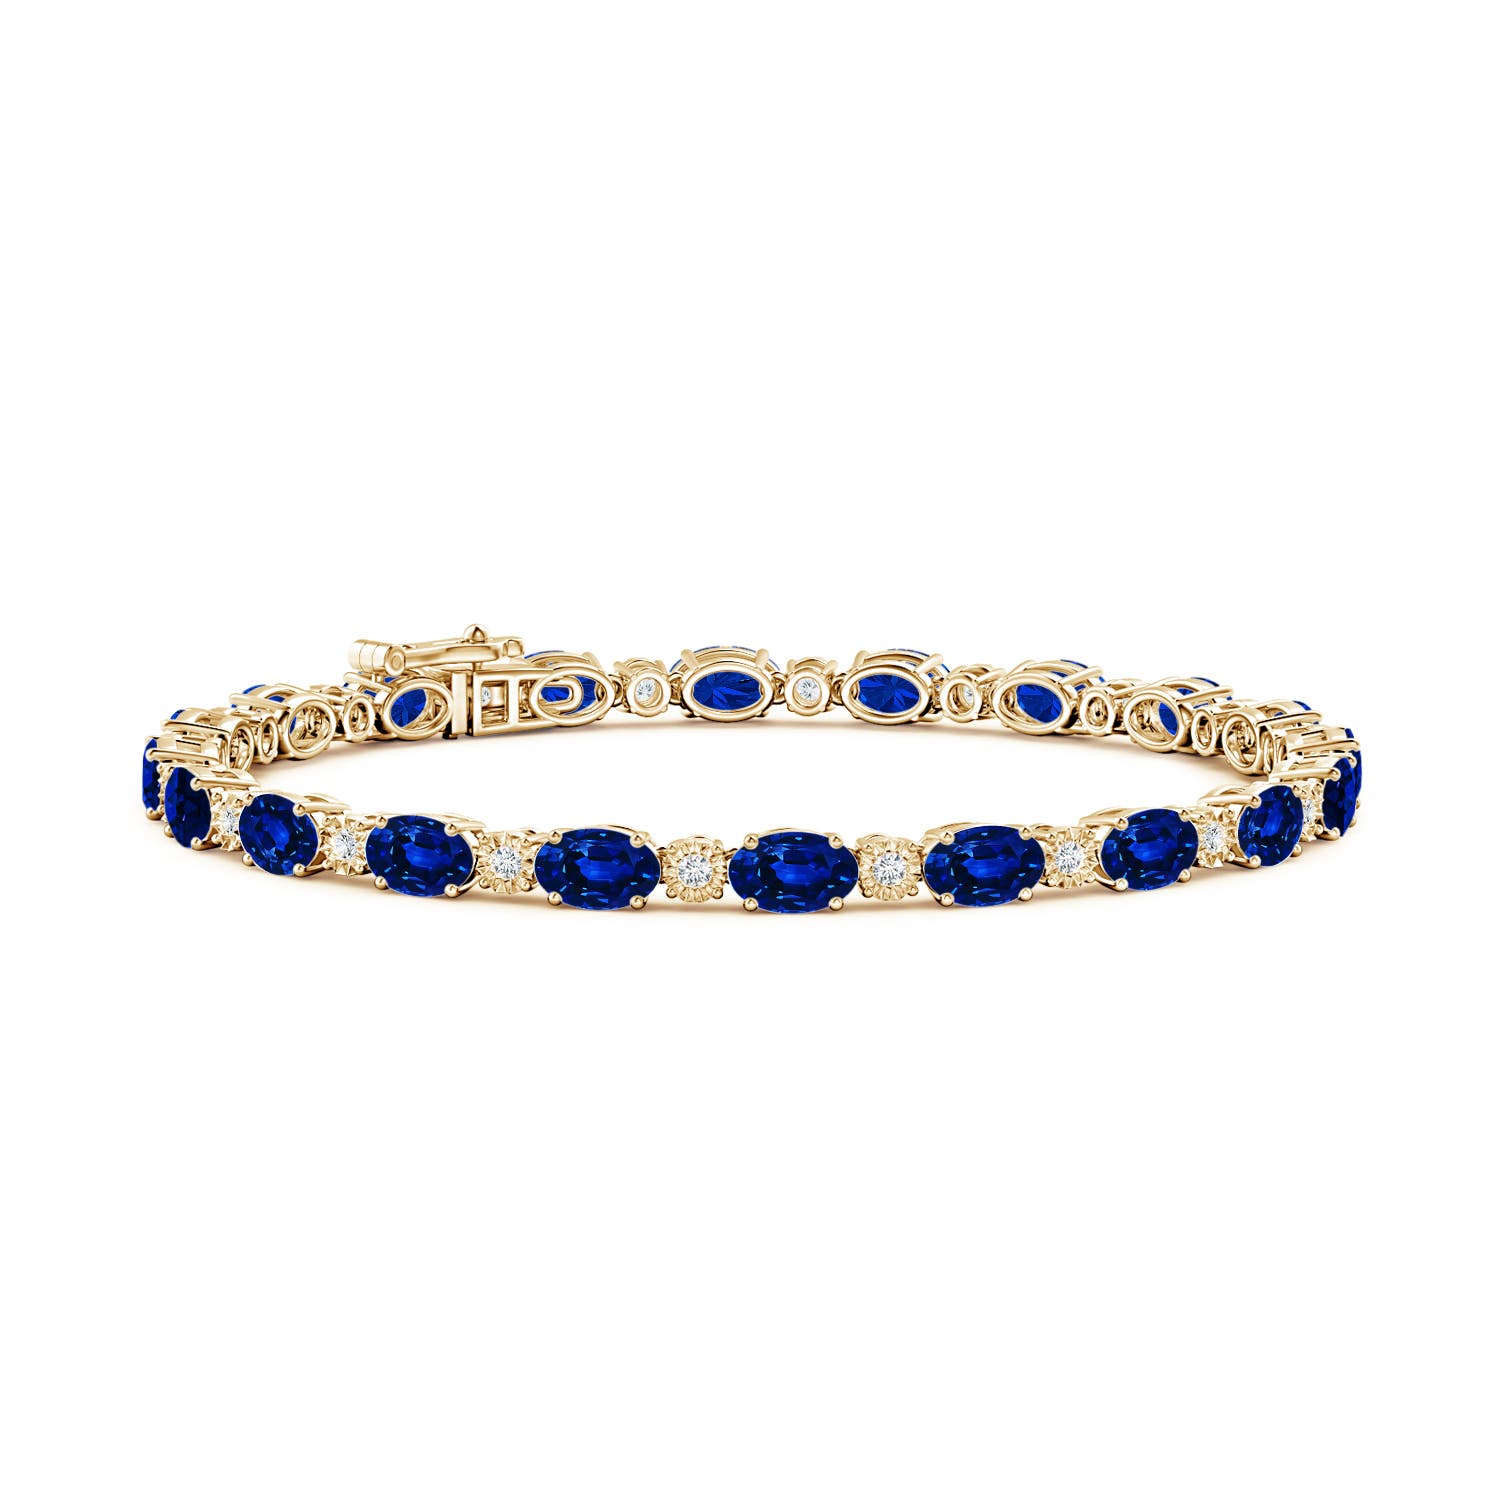 Oval sapphire angara tennis bracelet with gypsy diamonds